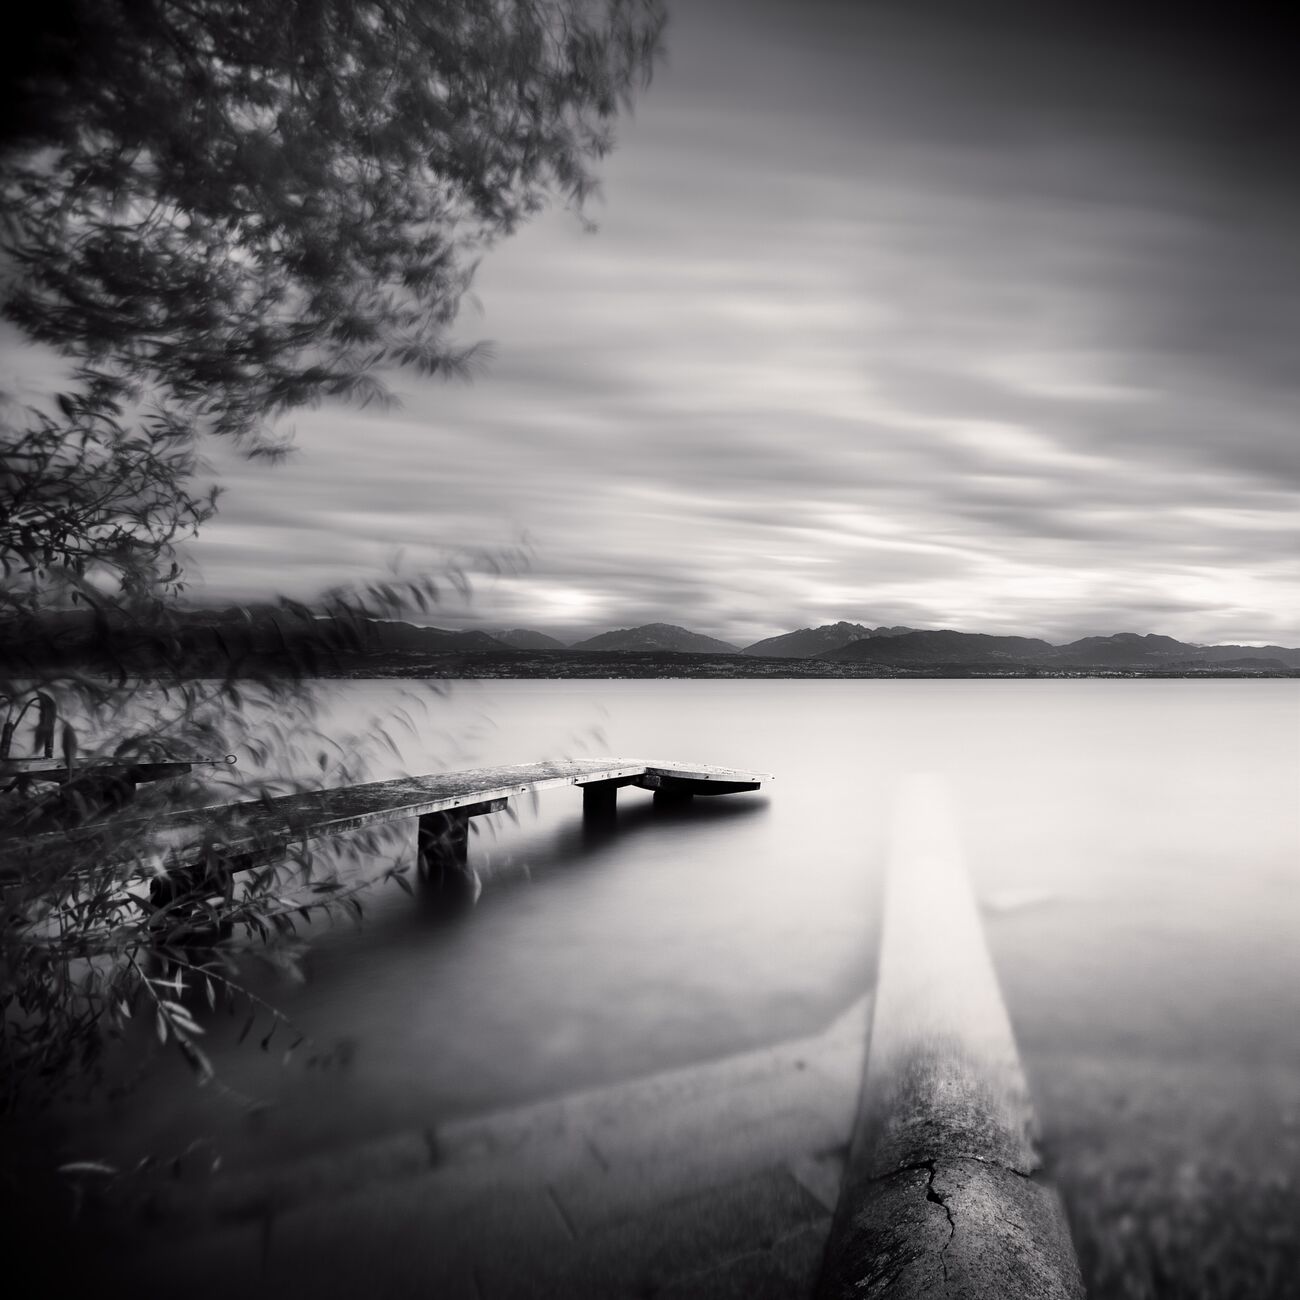 Pipe And Pontoon, Lake Geneva, Suisse. Août 2014. Ref-11483 - Denis Olivier Photographie